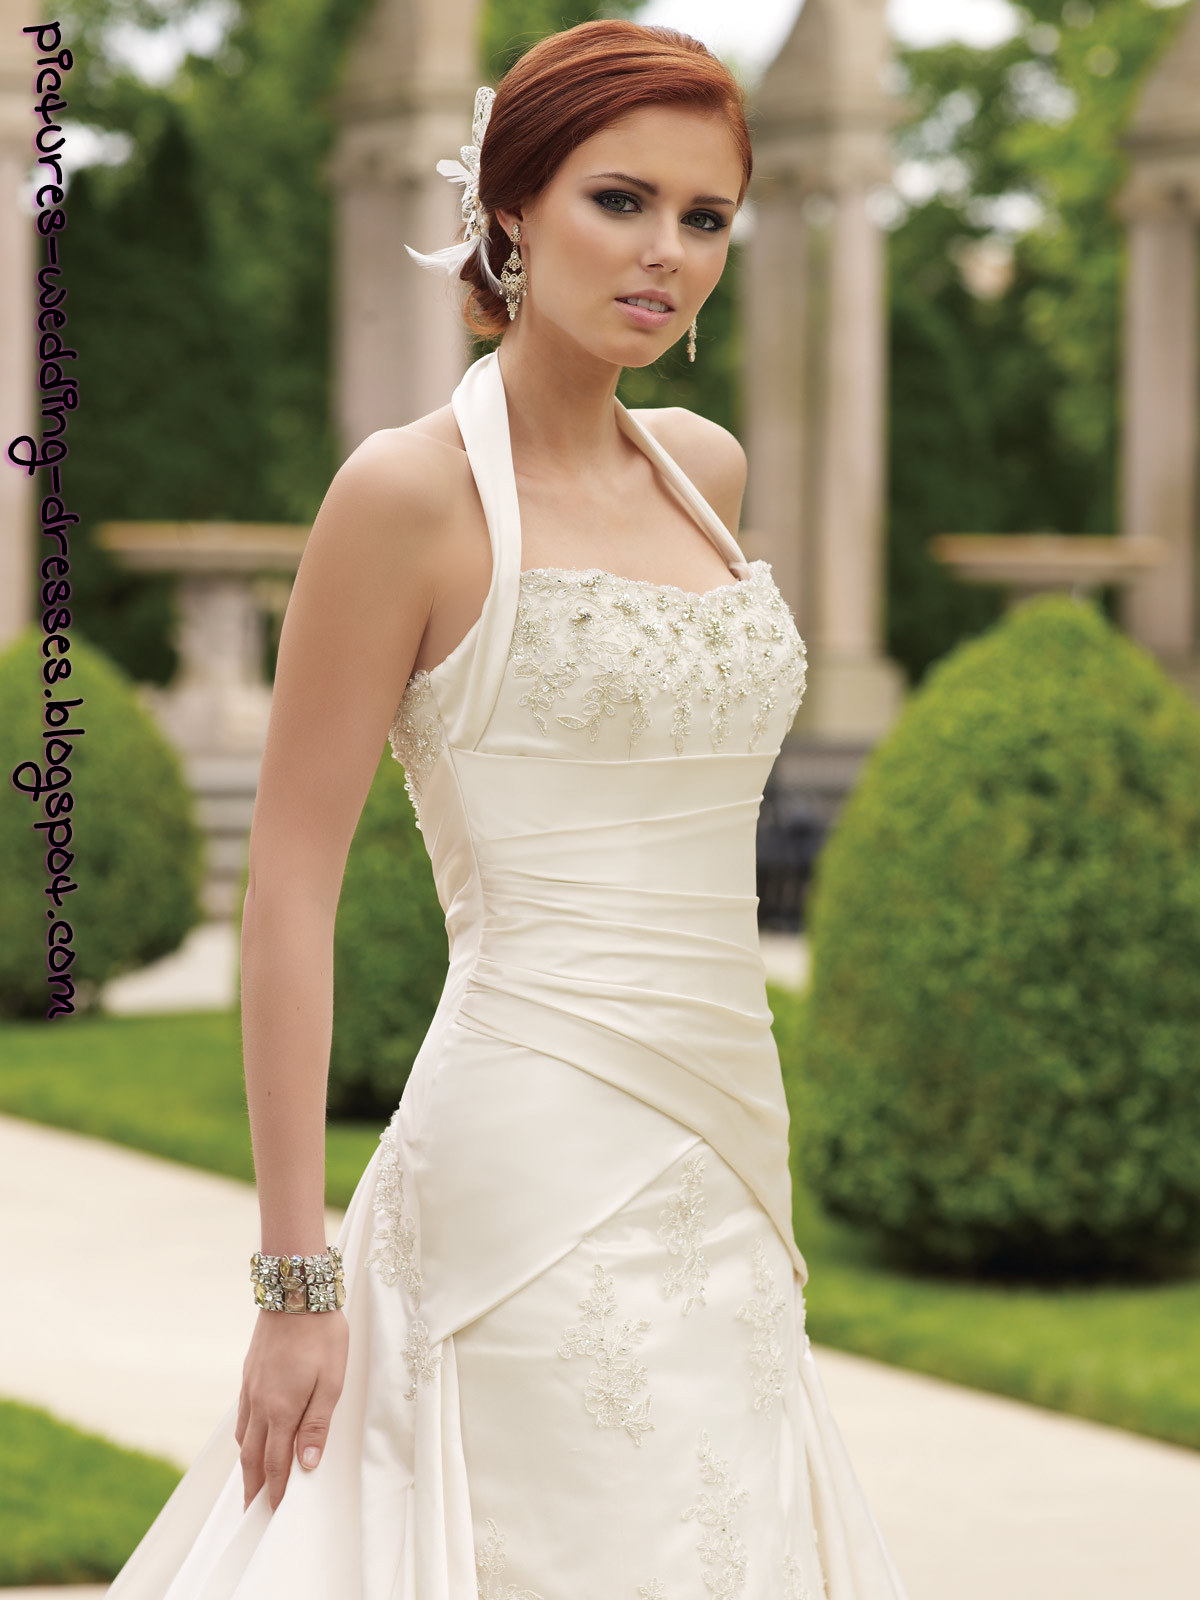 strapless satin mermaid wedding dresses Bridal Gowns 2011 Fashion Trends, photos wedding gown brides